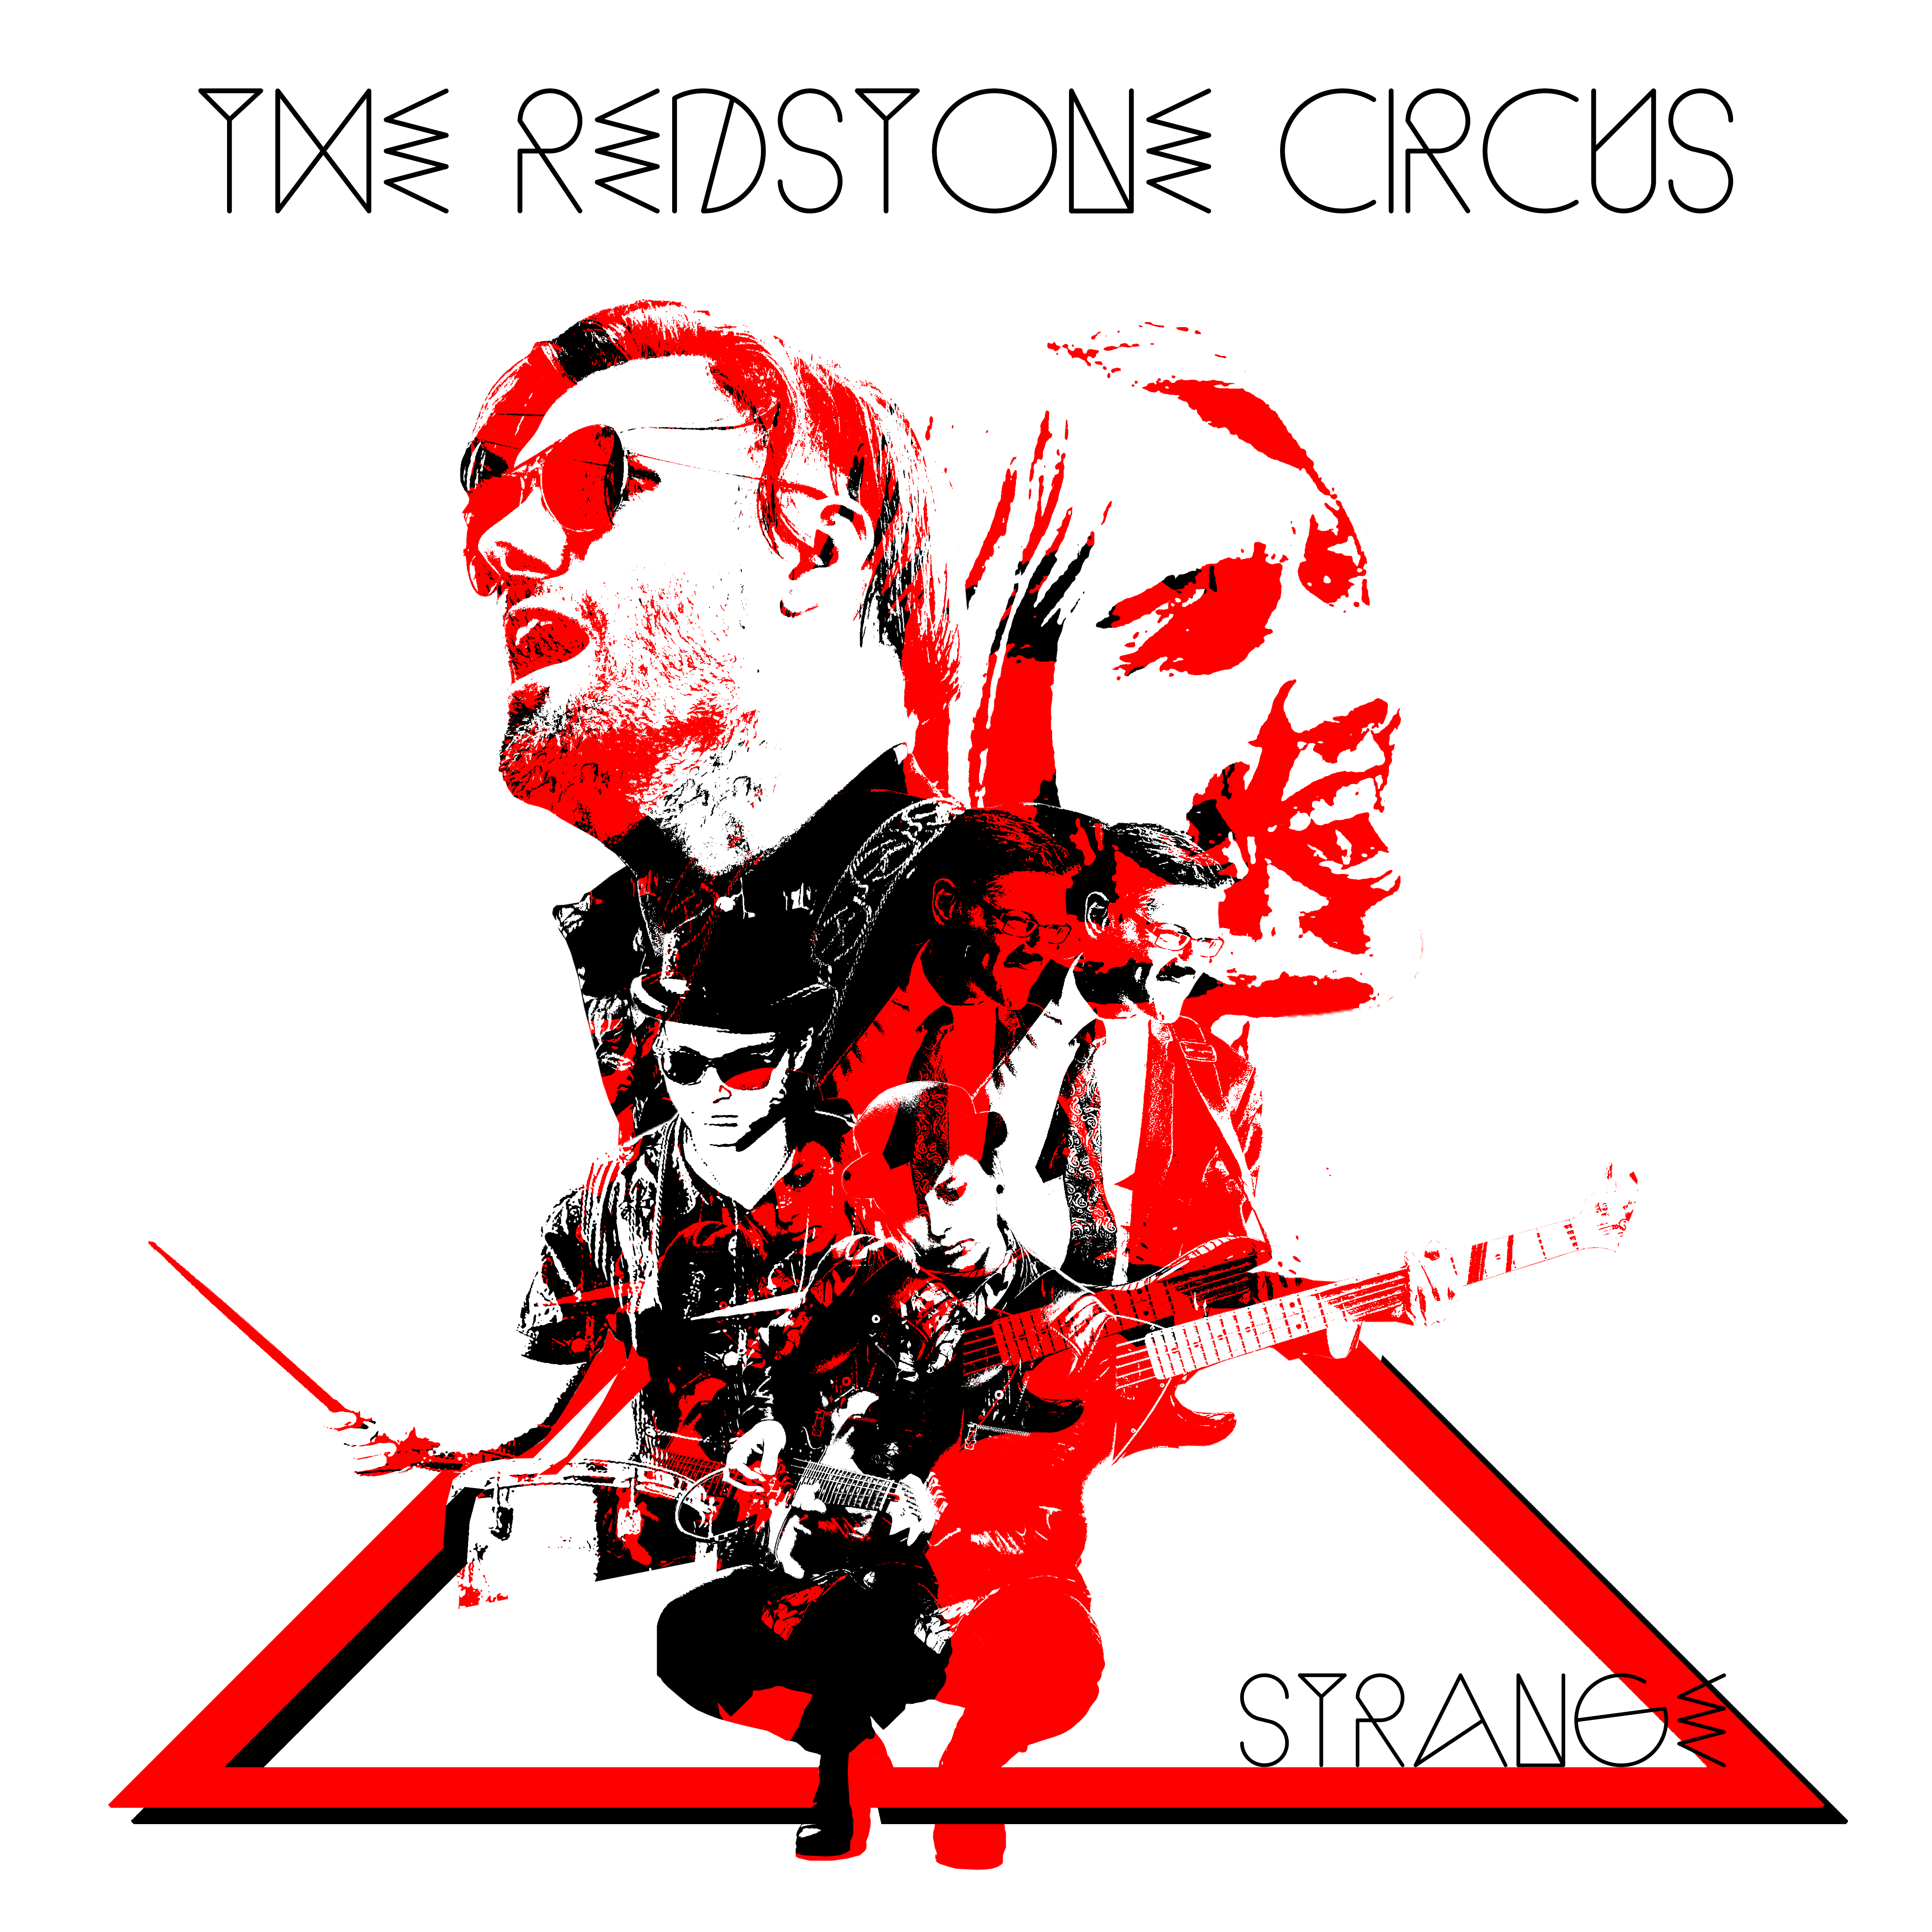 The Redstone Circus